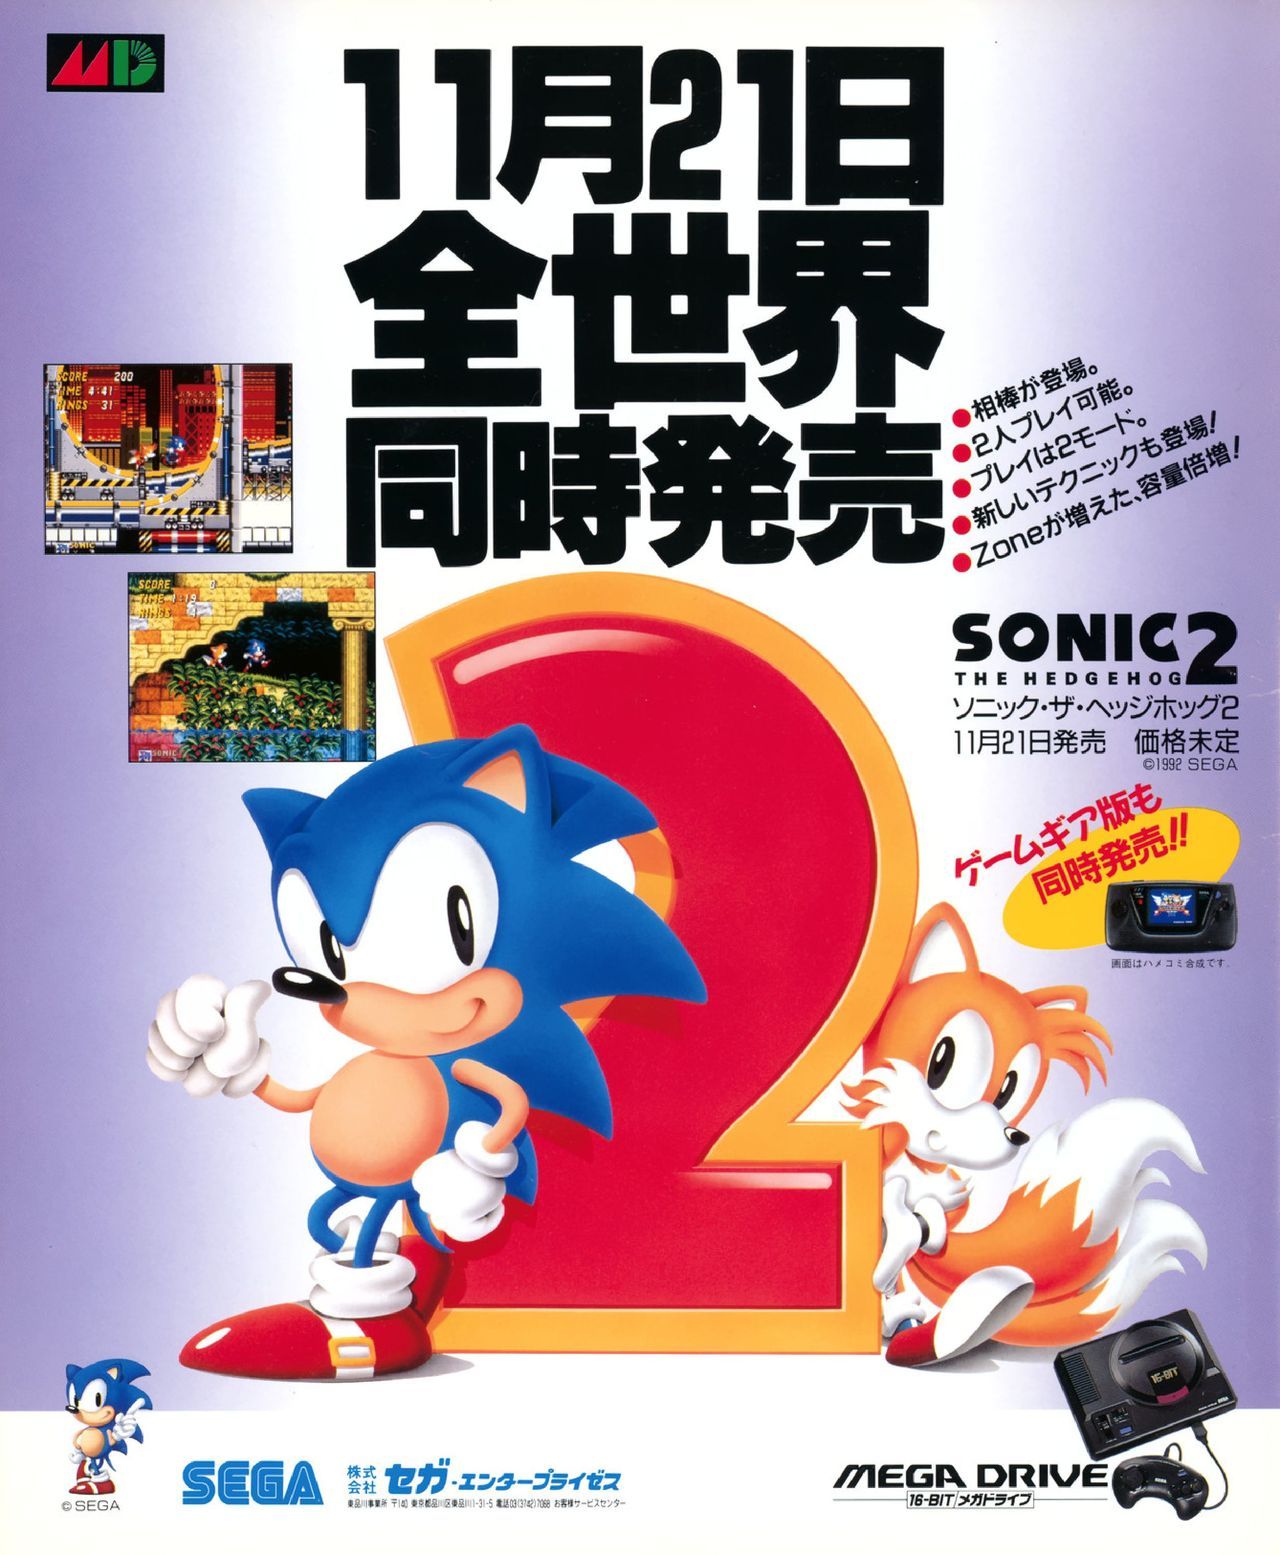 Sonic jp. Sega 1992. Управление Sonic JT.